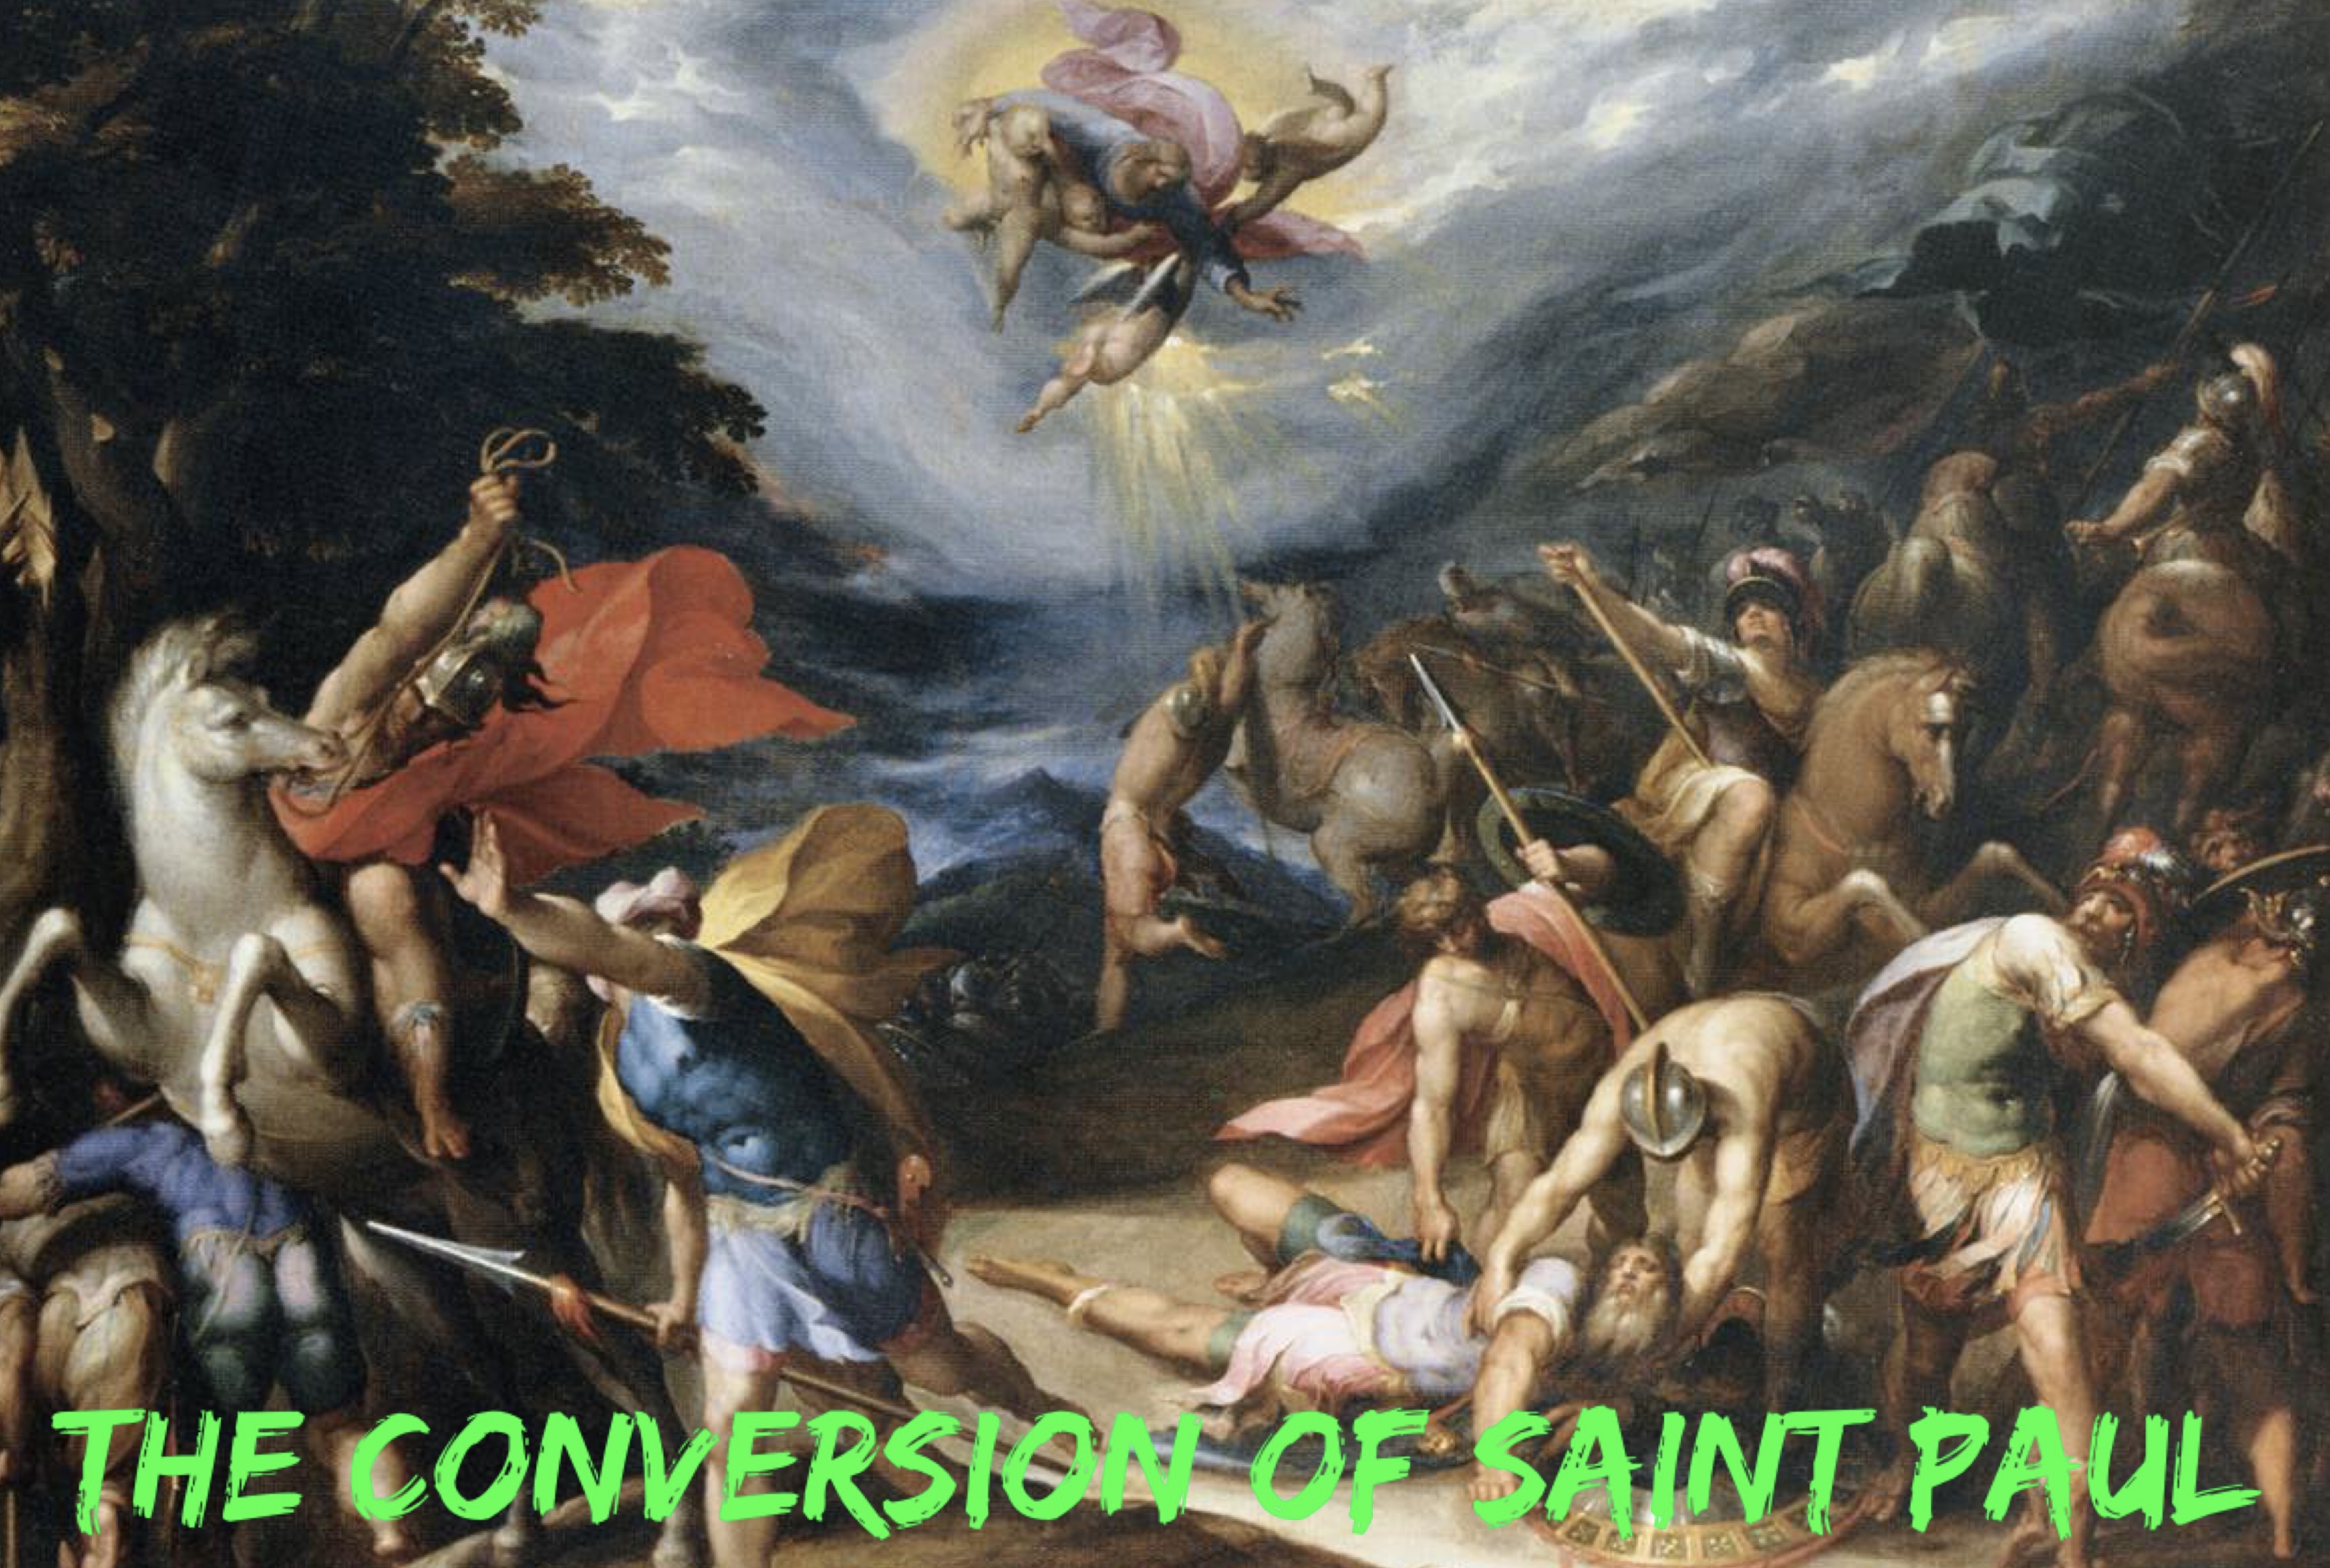 25th January - The Conversion of Saint Paul